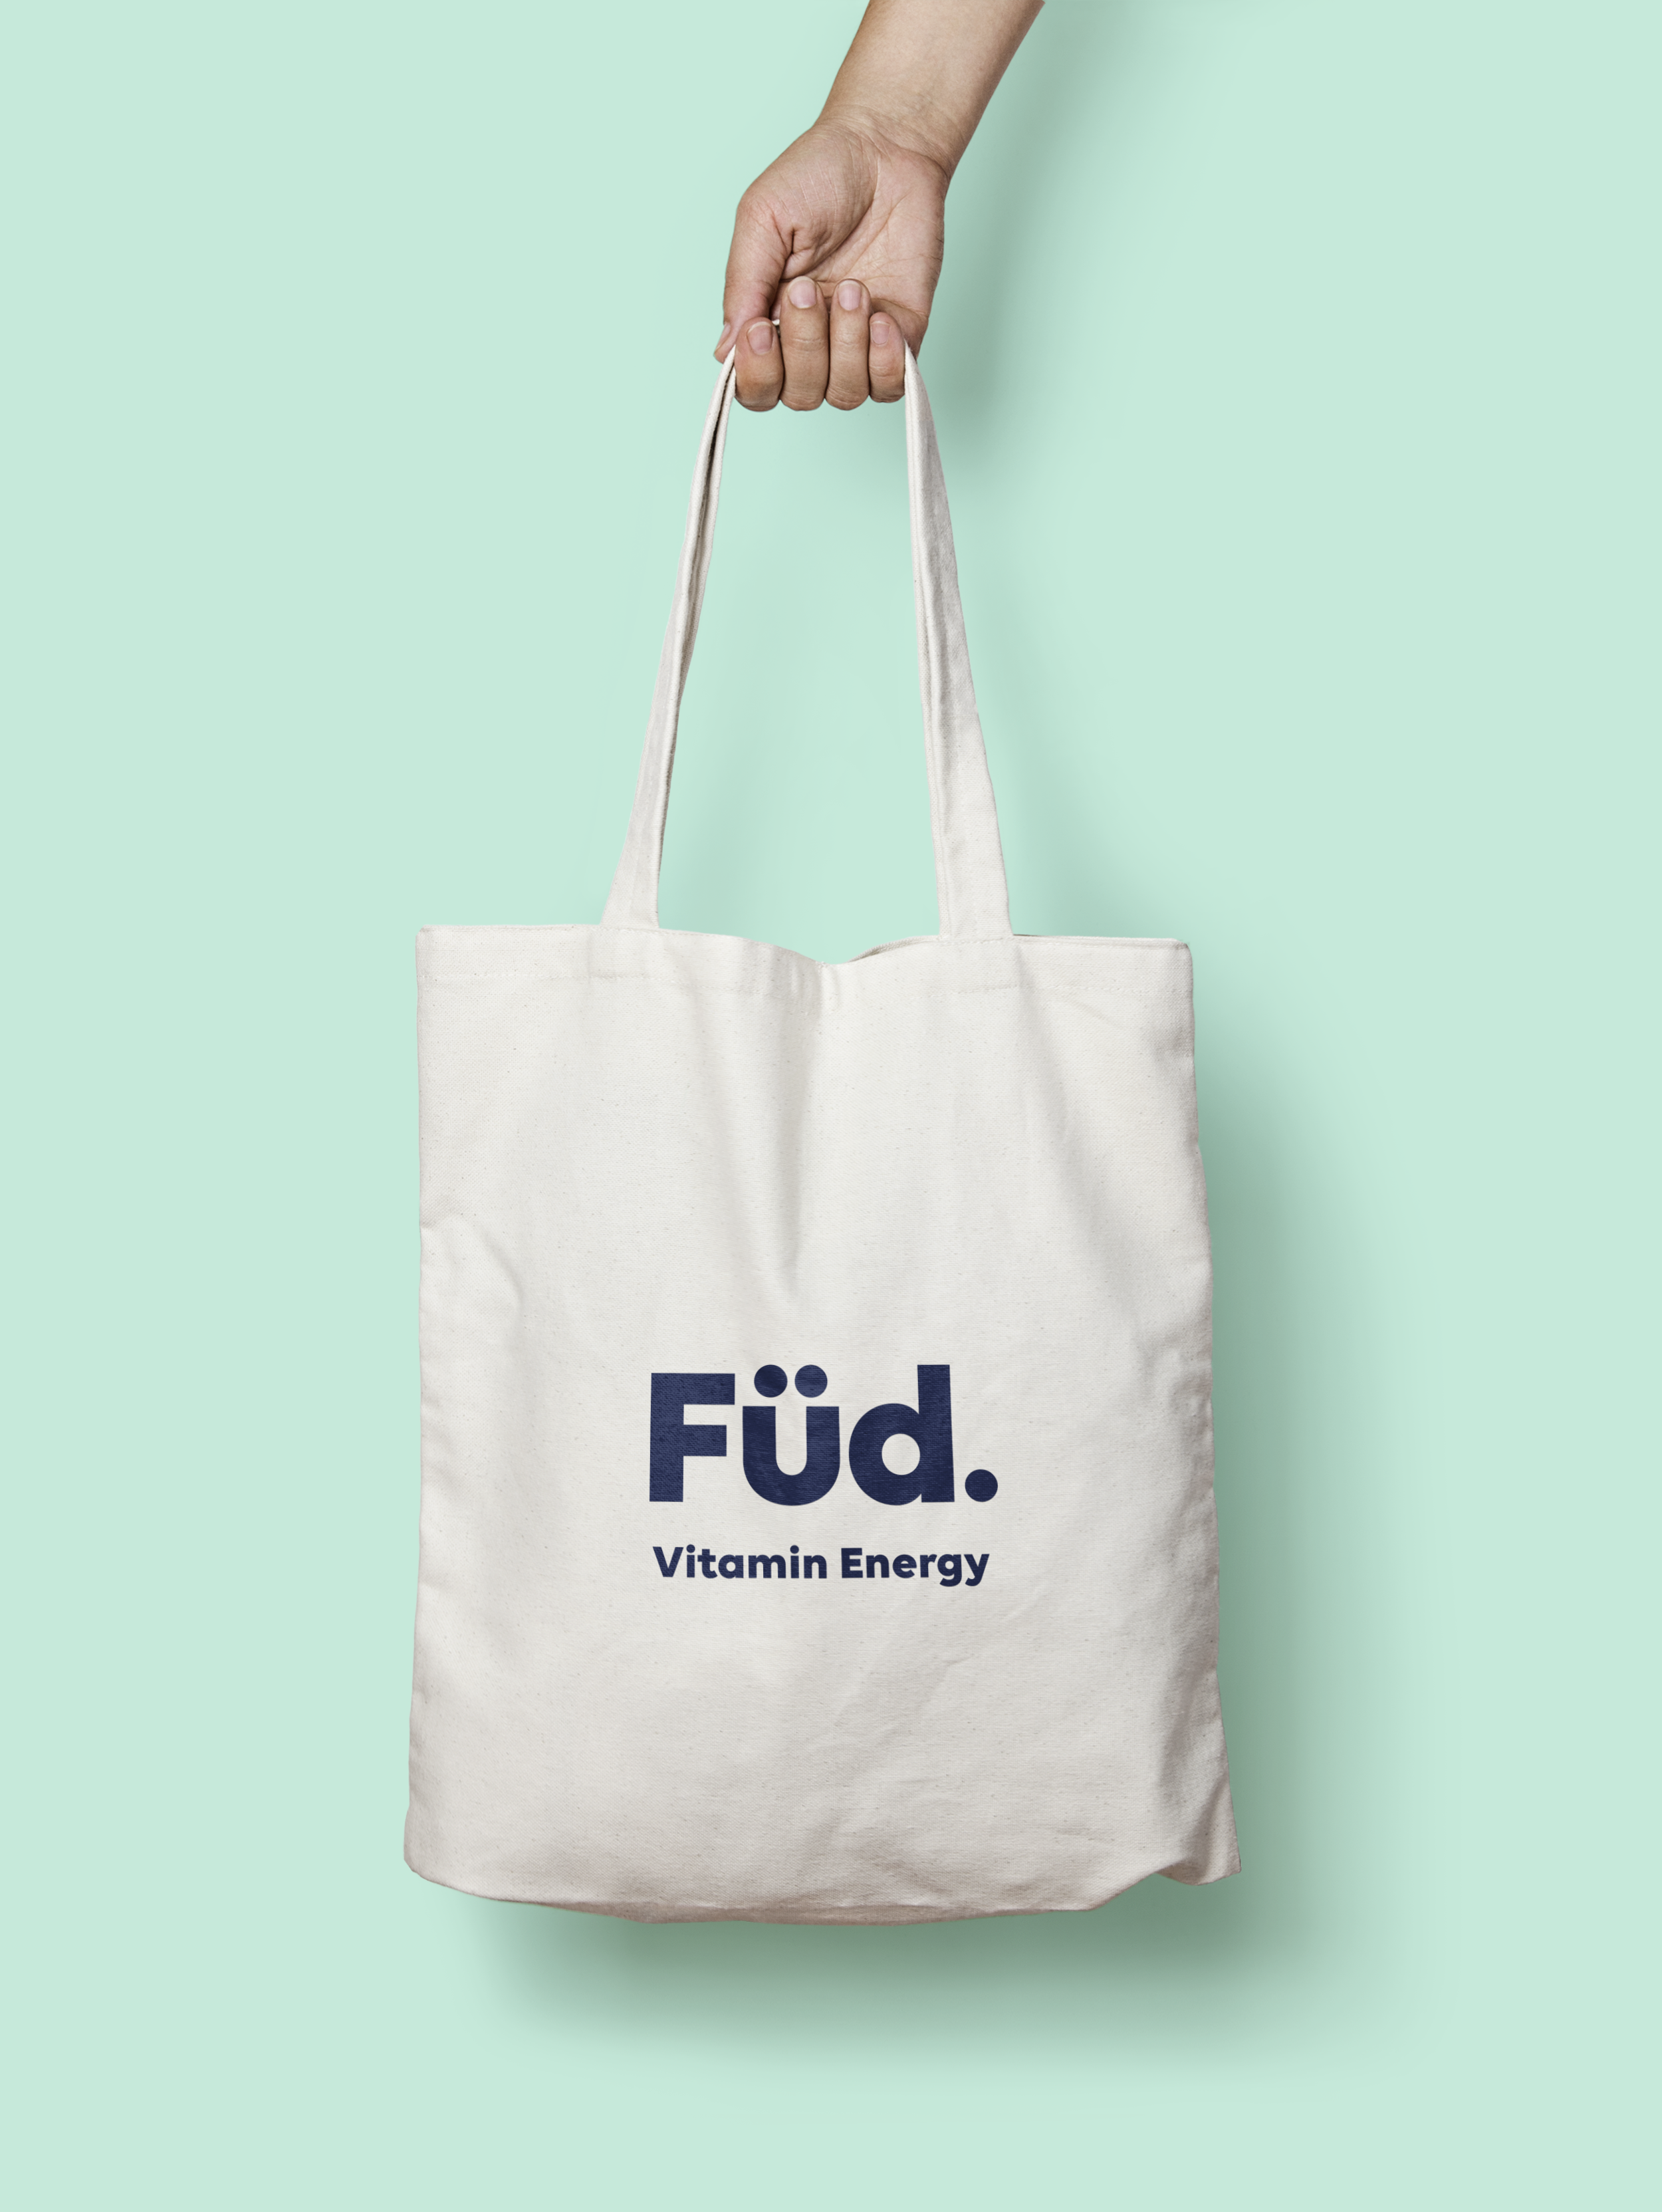 Food and beverage packaging designer UK. A hand holding a Füd white tote bag